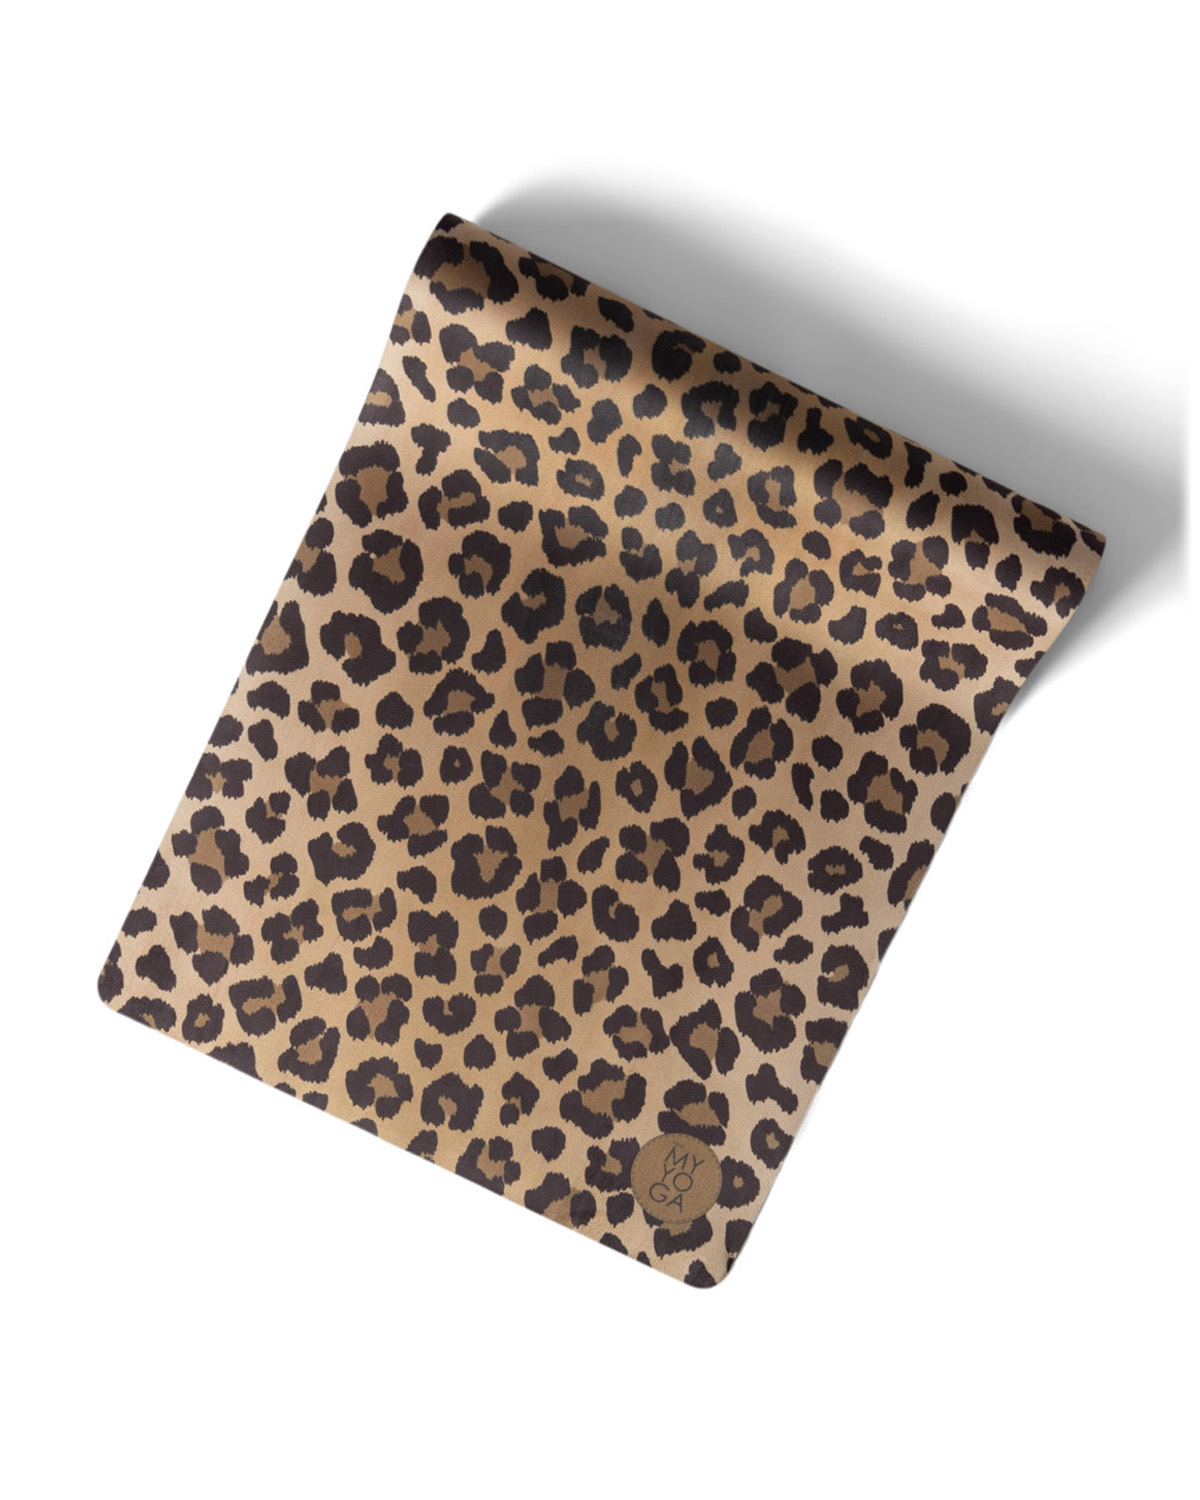  susiyo Leopard Skin Texture Travel Yoga Mat, 1MM